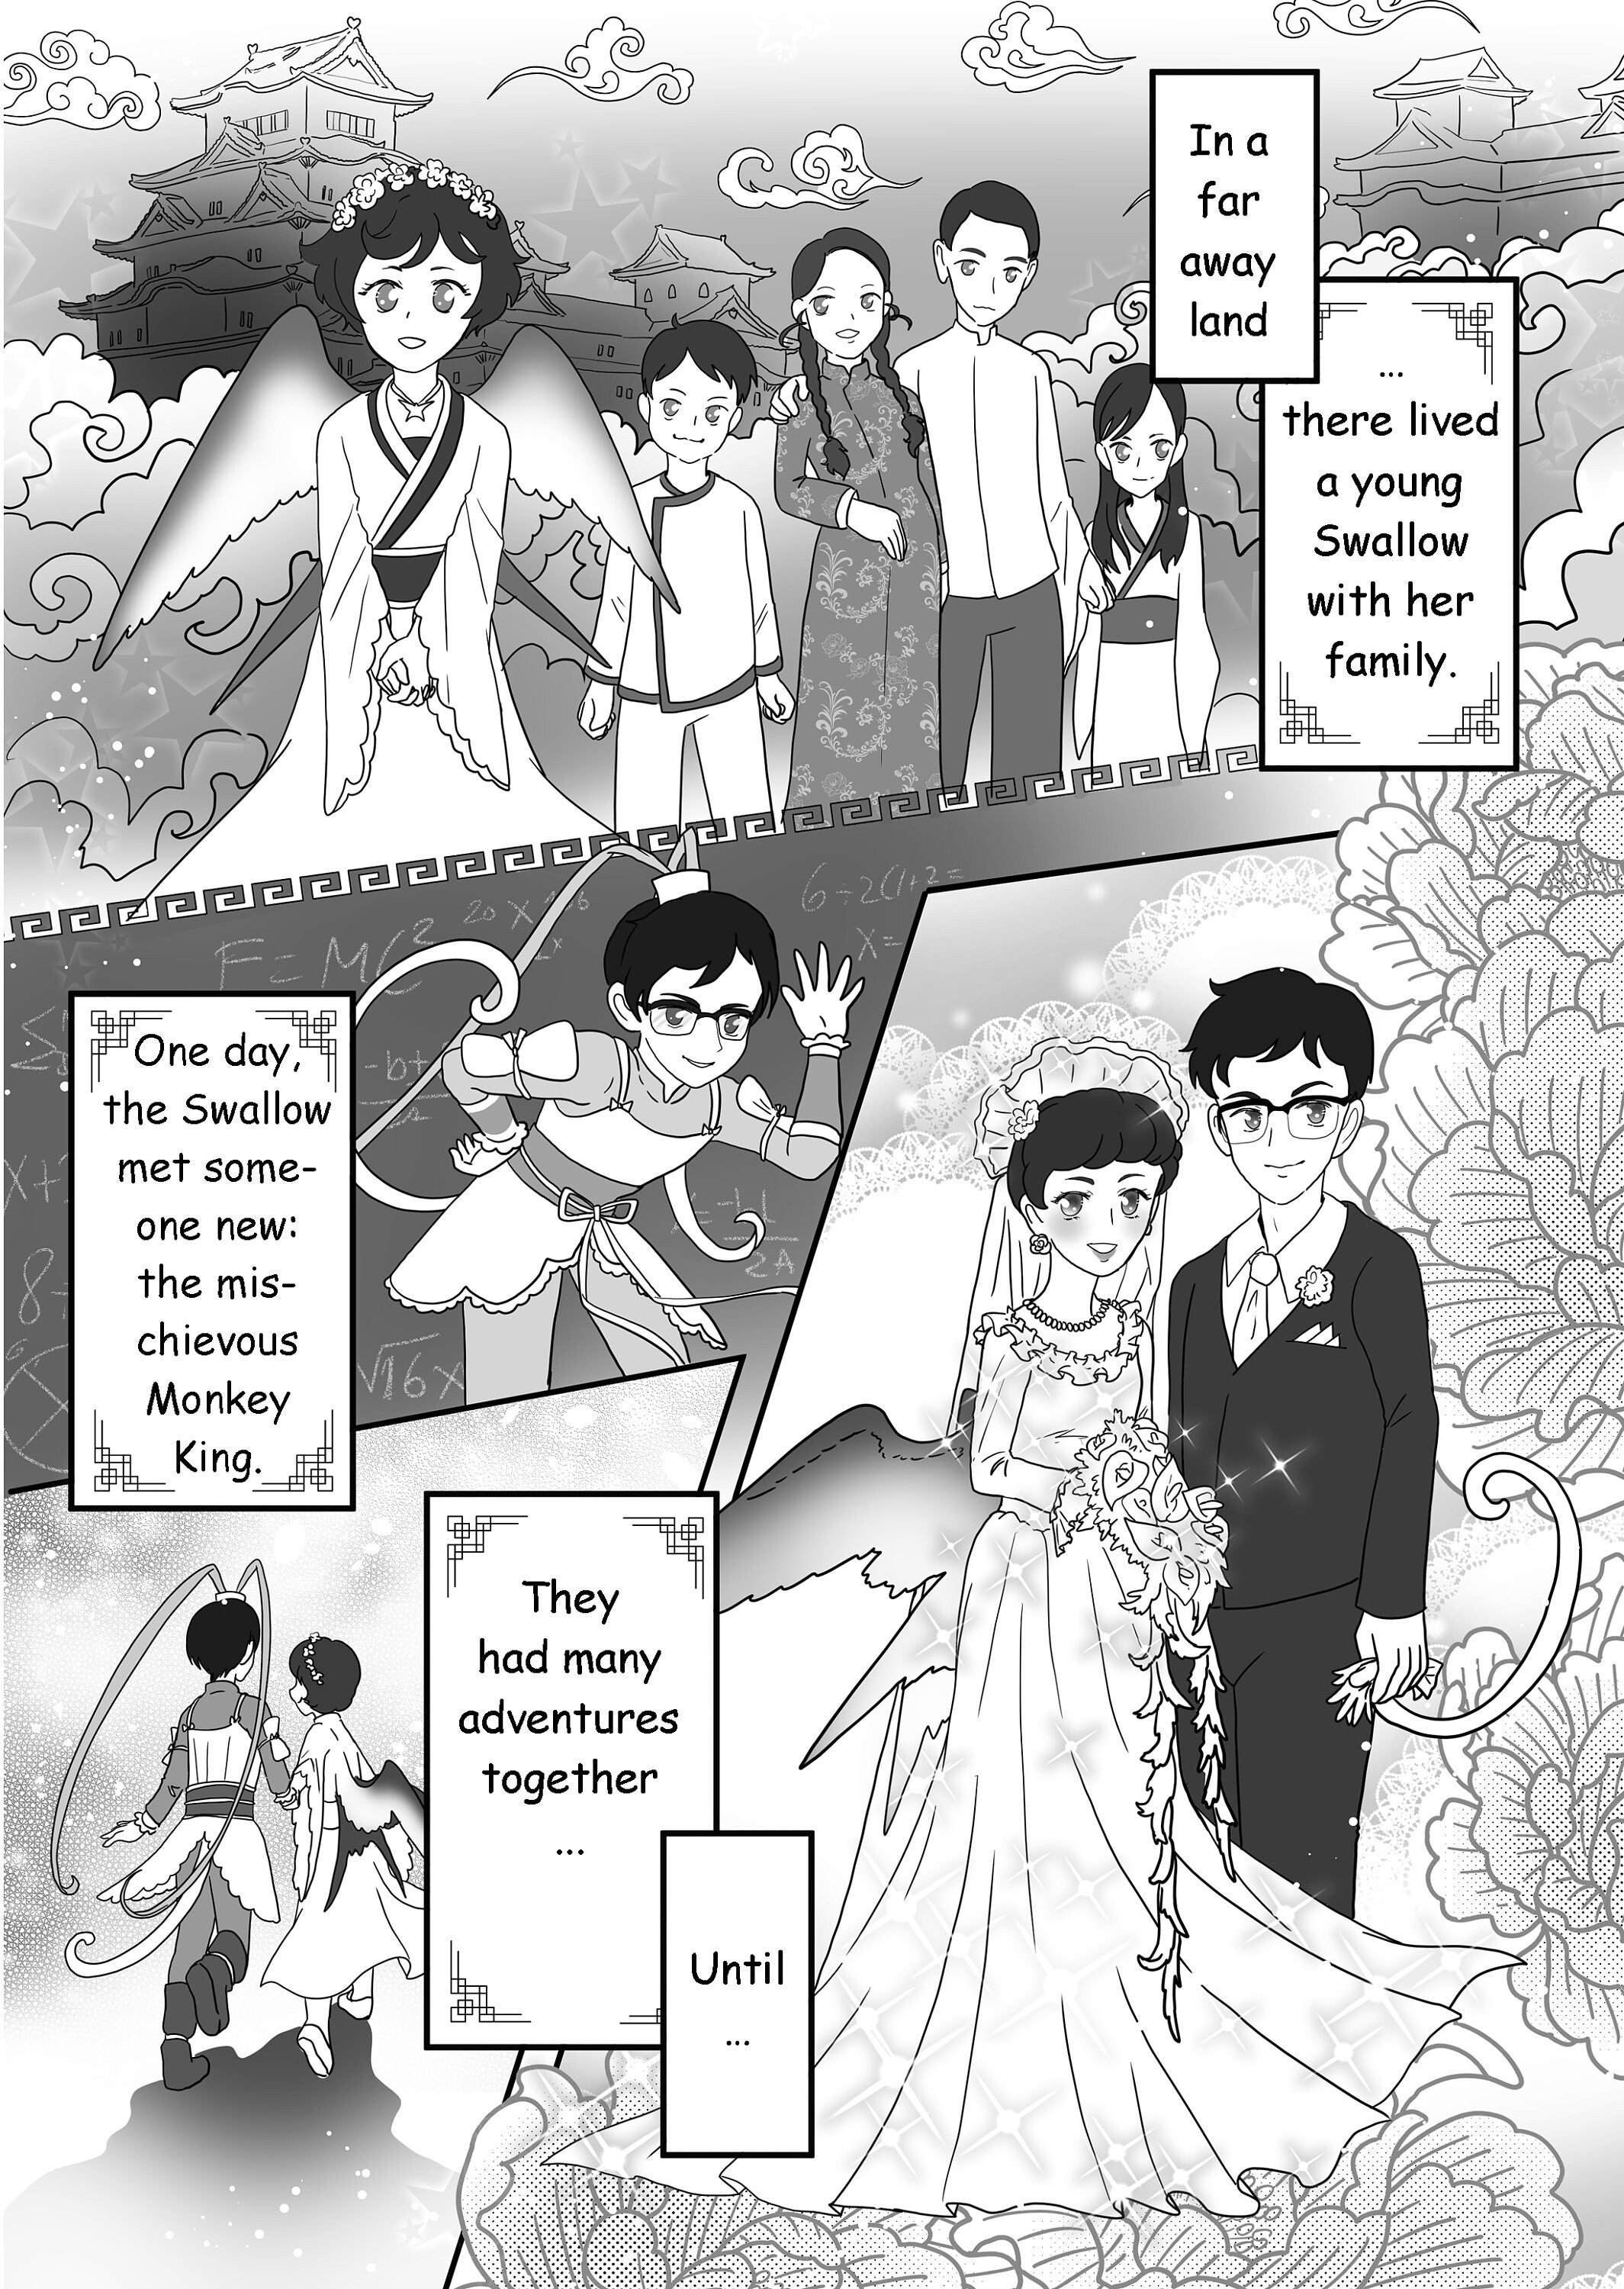 Custom wedding love story manga comic page commission